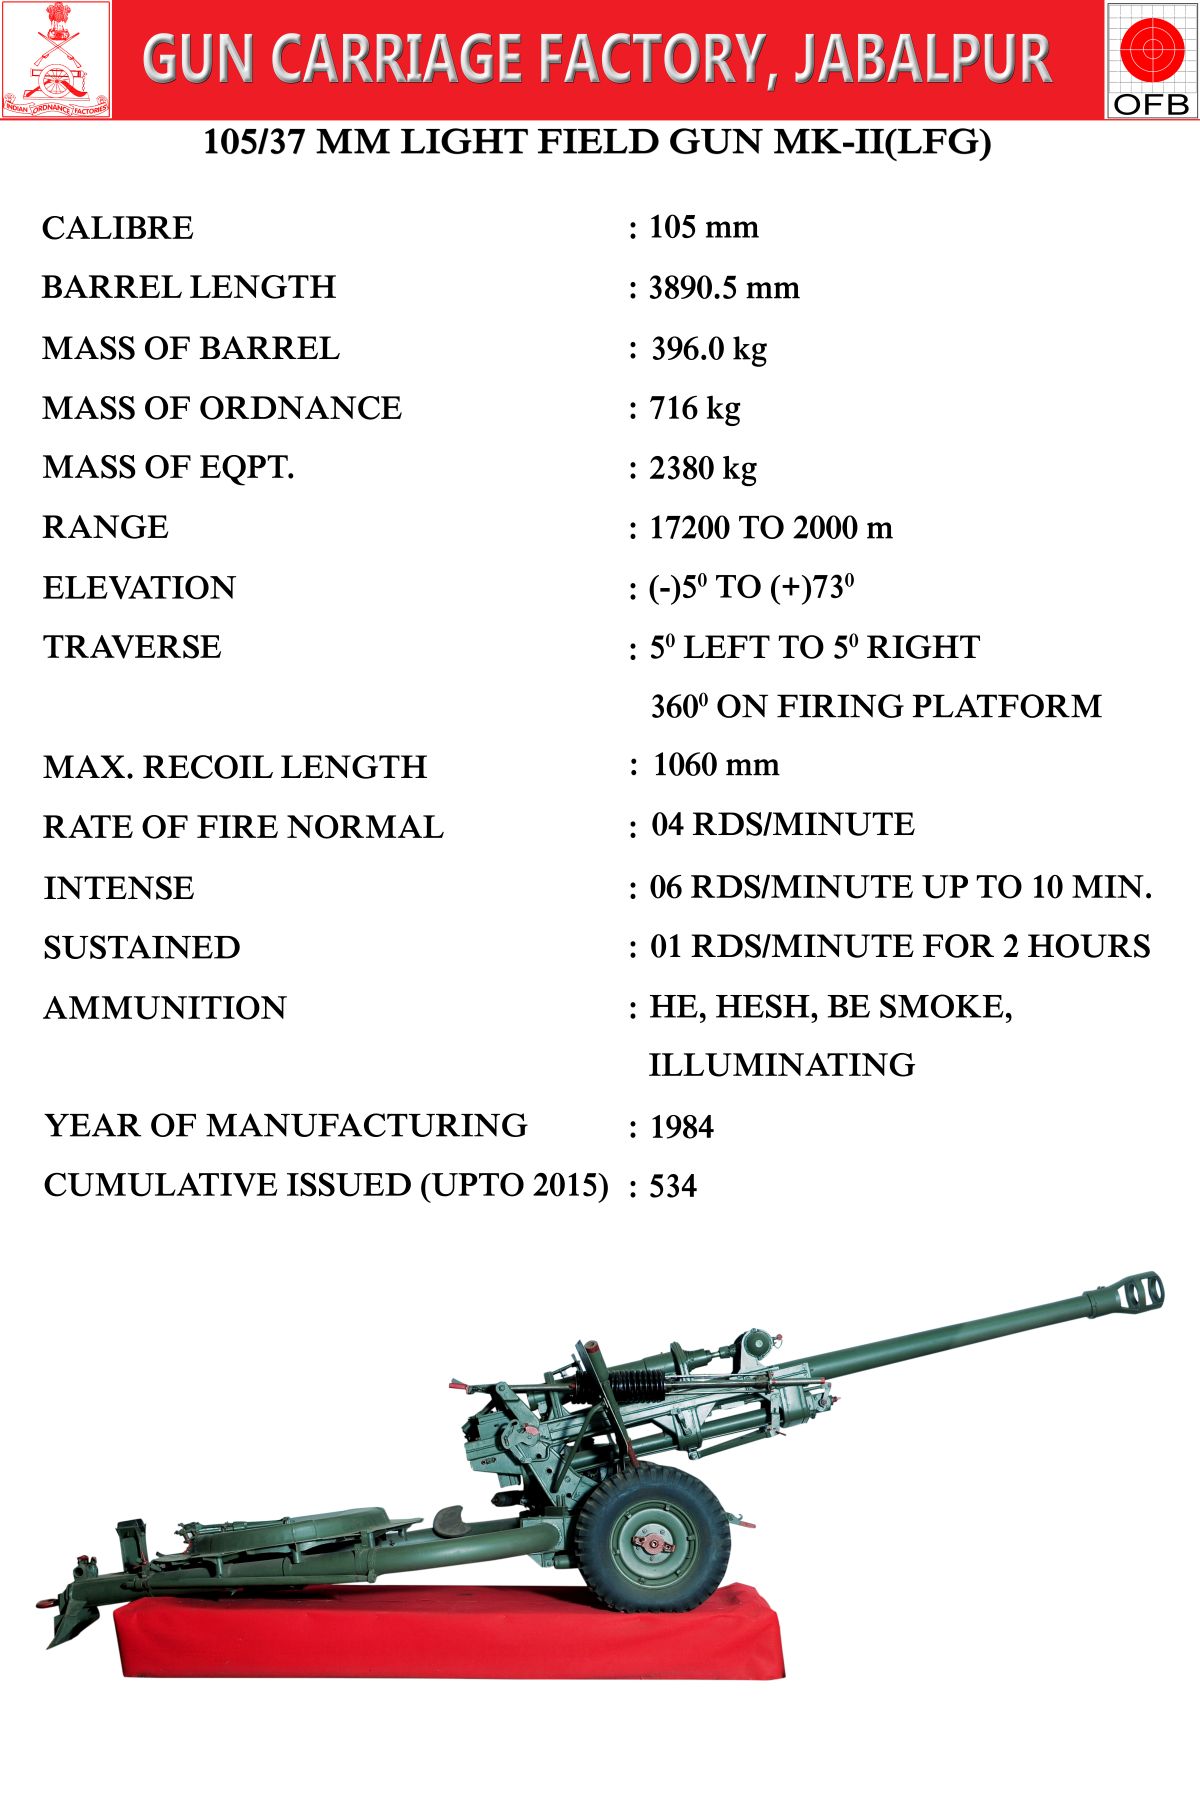 105mm LIGHT FIELD GUN MK-II (LFG)